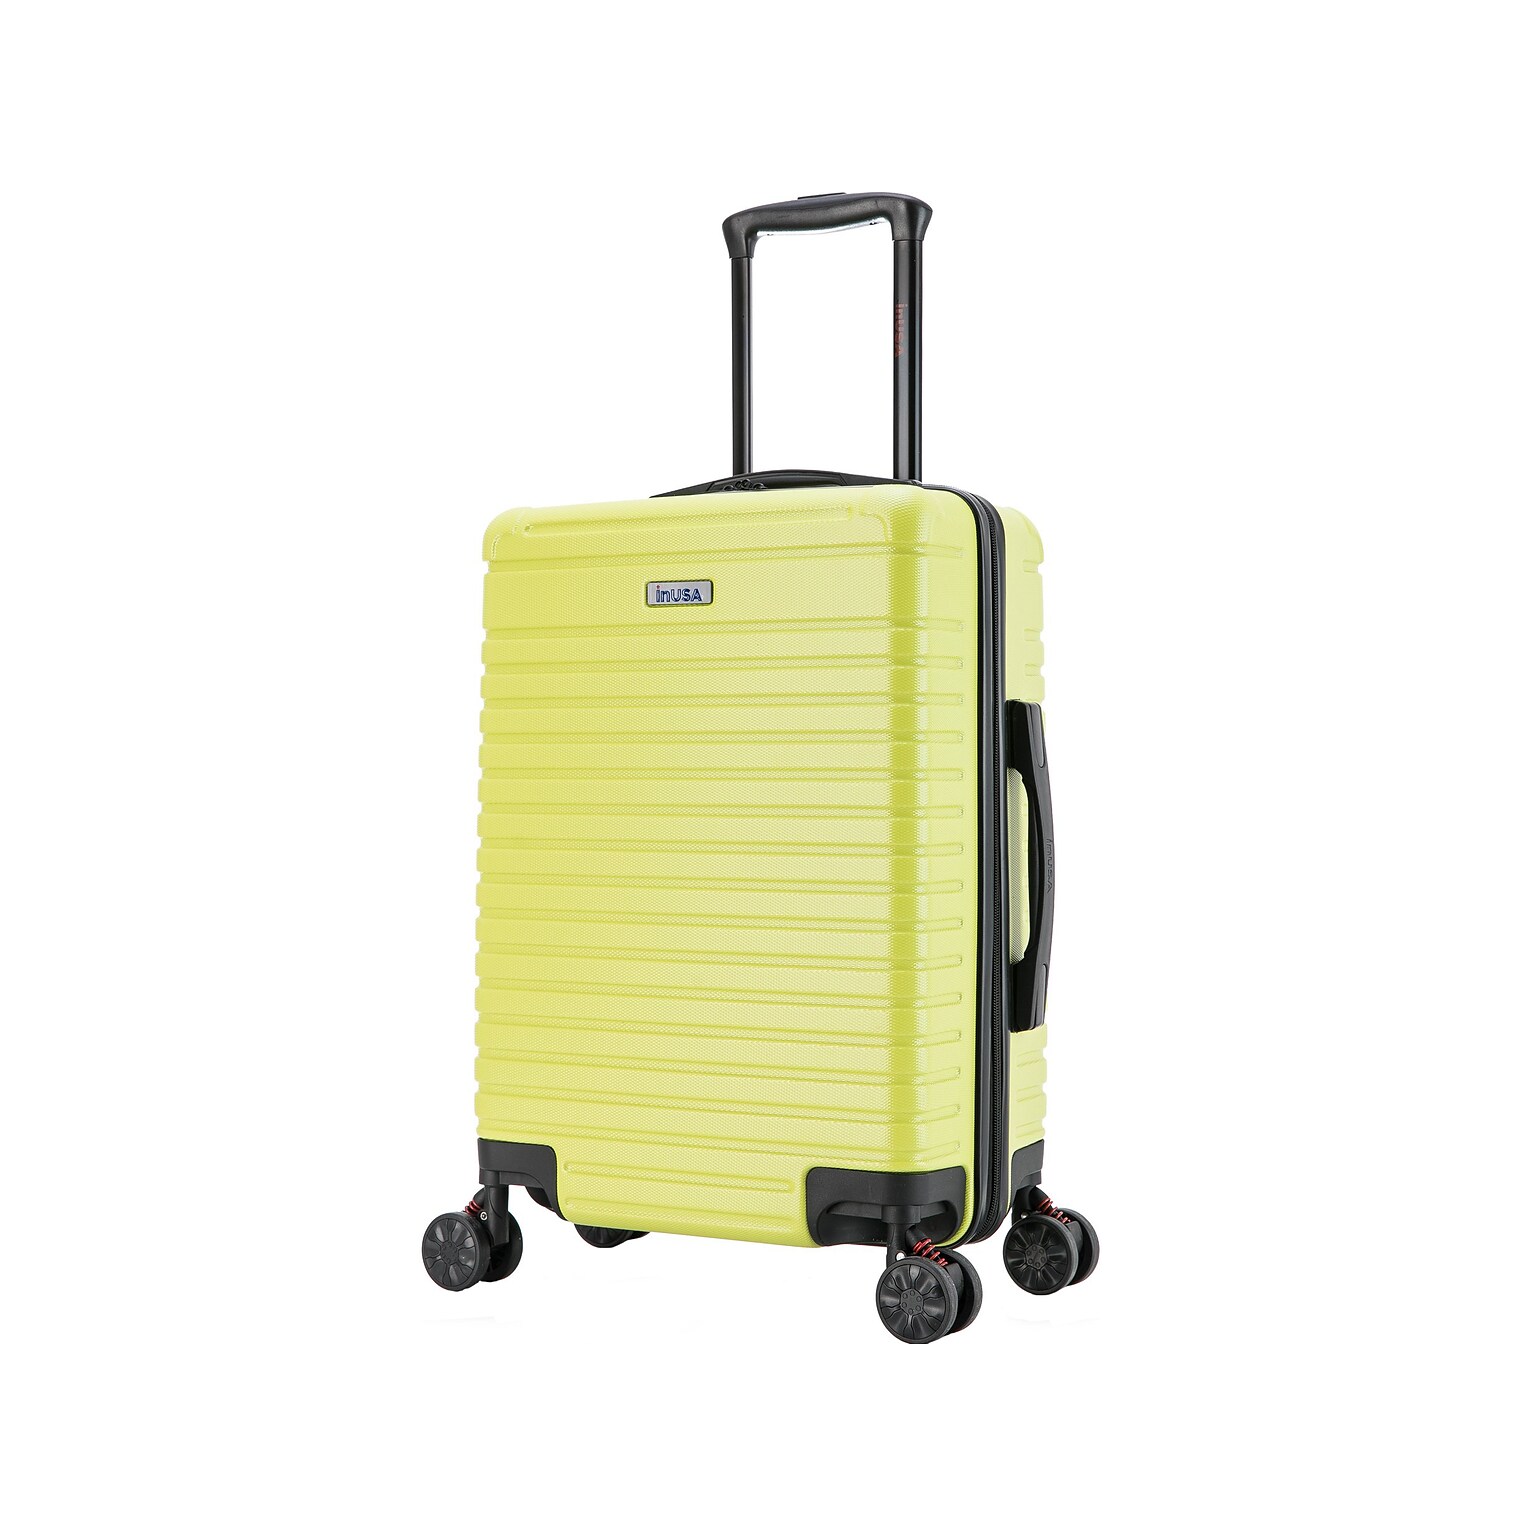 InUSA Deep 21.65 Hardside Carry-On Suitcase, 4-Wheeled Spinner, Green (IUDEE00S-GRN)